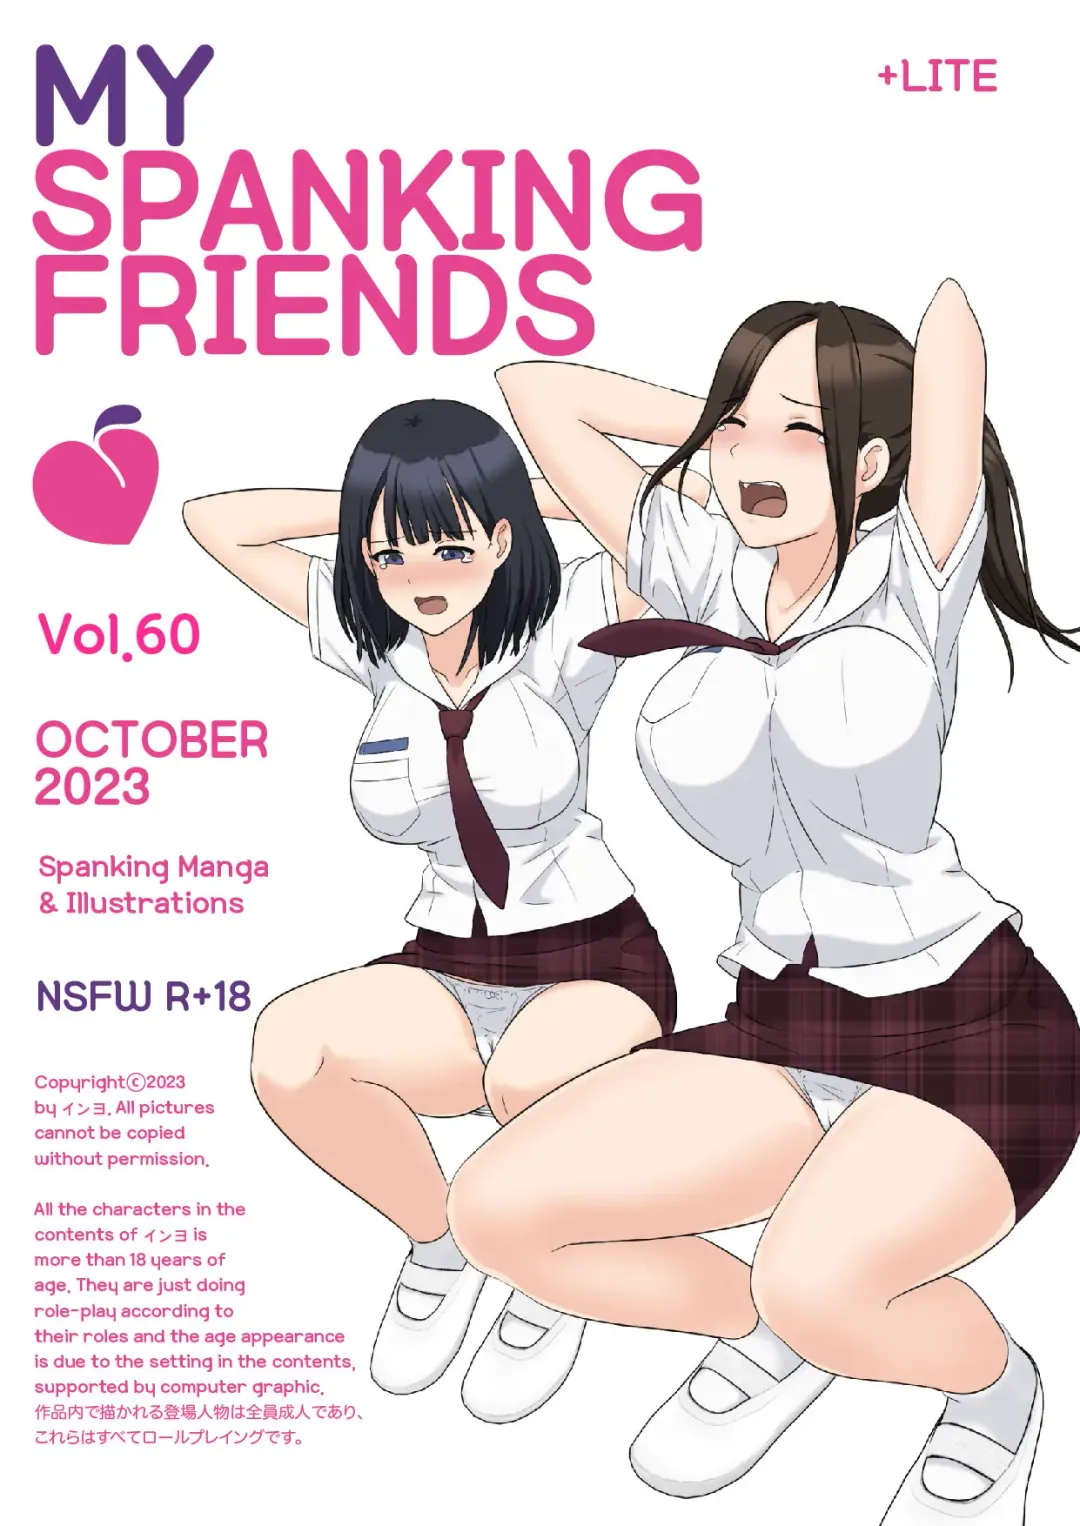 Read [Eingyeo] My Spanking Friends Vol. 60 - Fhentai.net